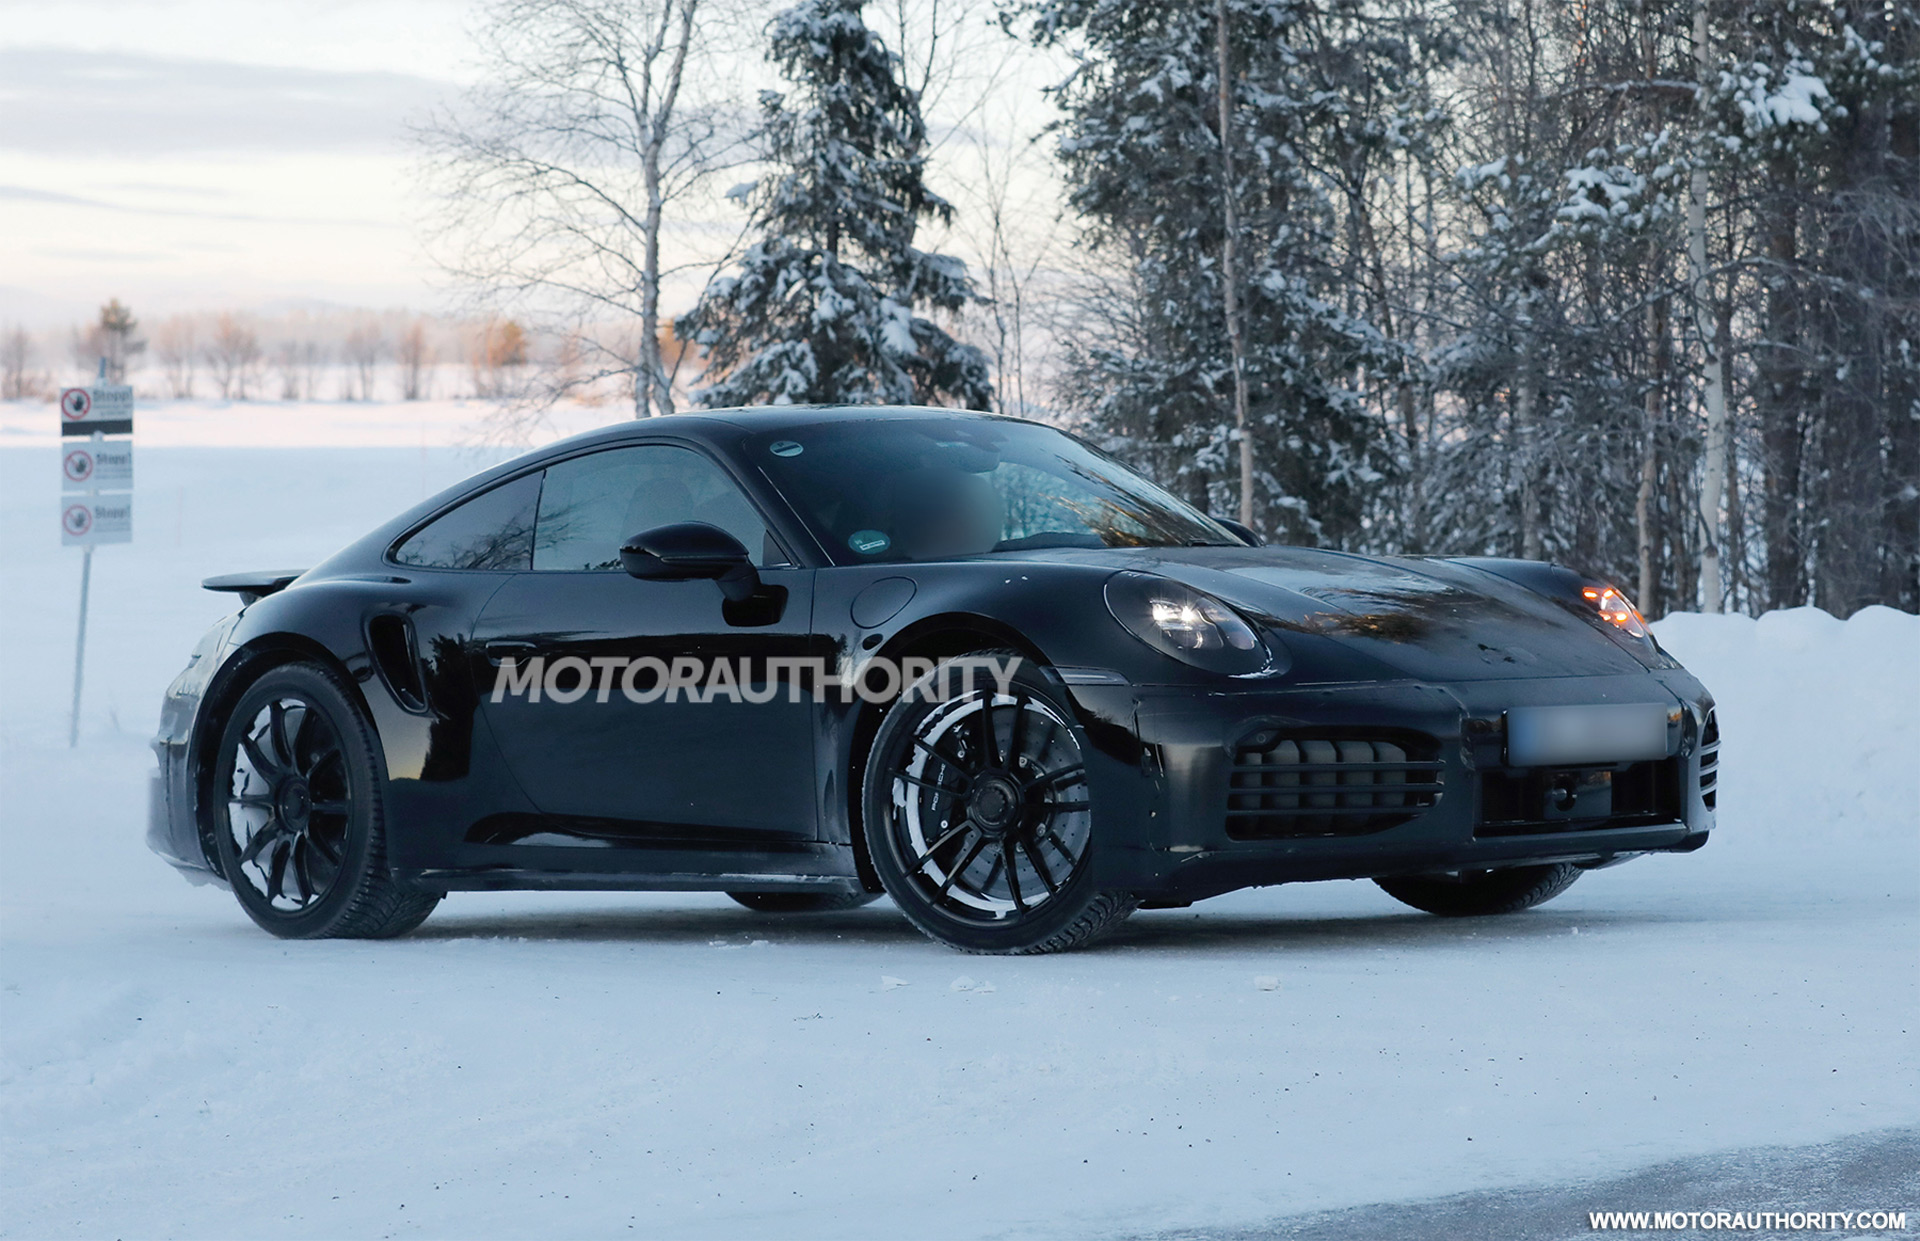 2025 Porsche 911 Turbo, 2025 Buick Enclave: Car News Headlines Auto Recent